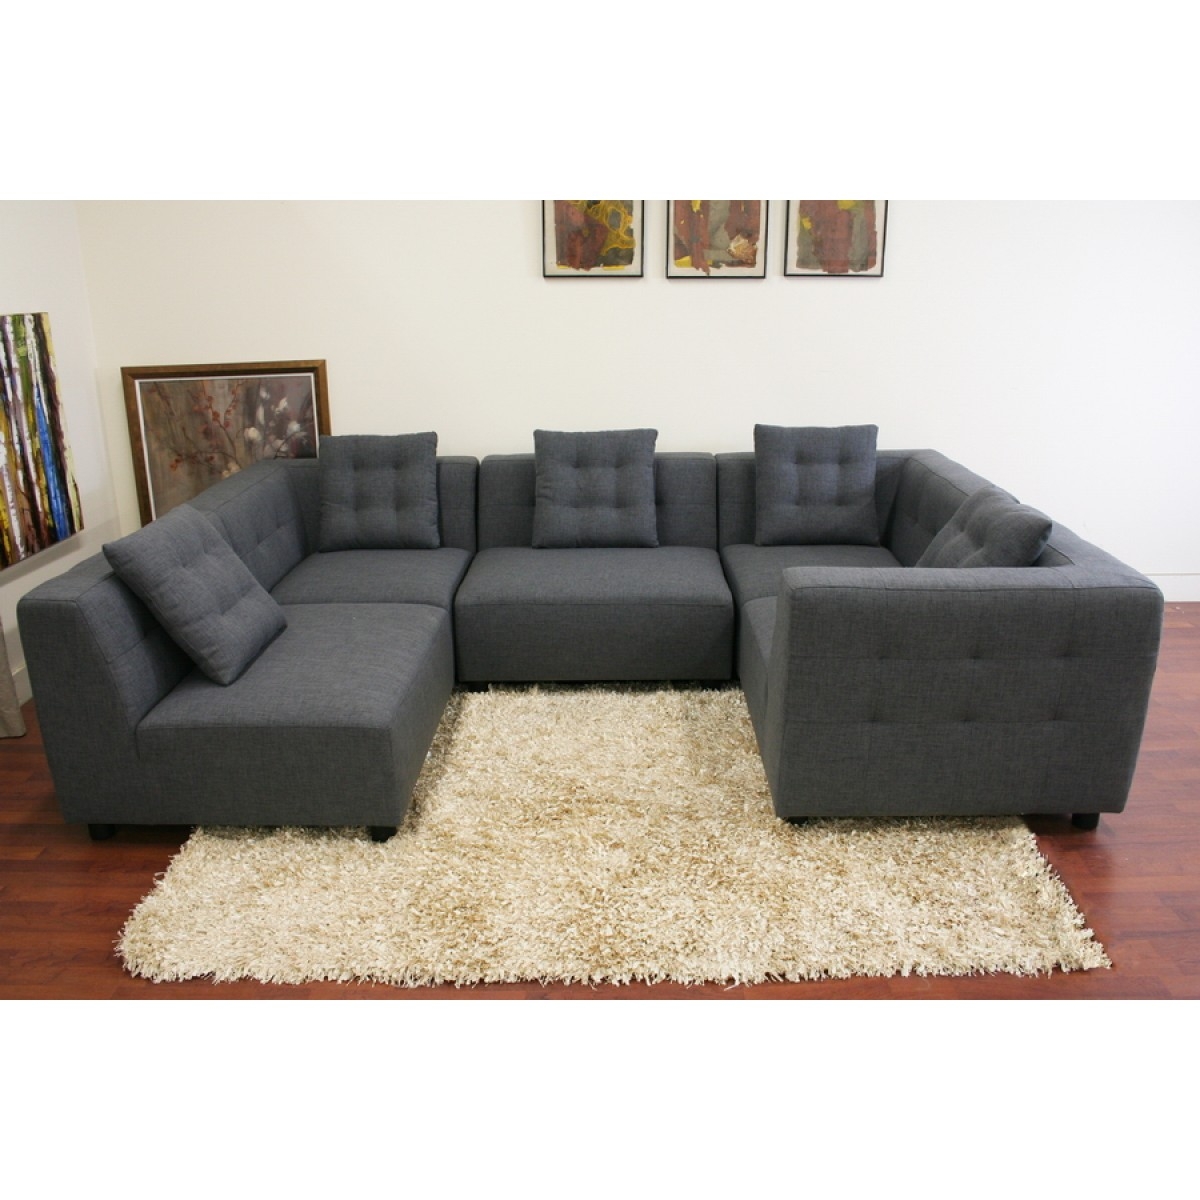 Modular sofa bed with storage